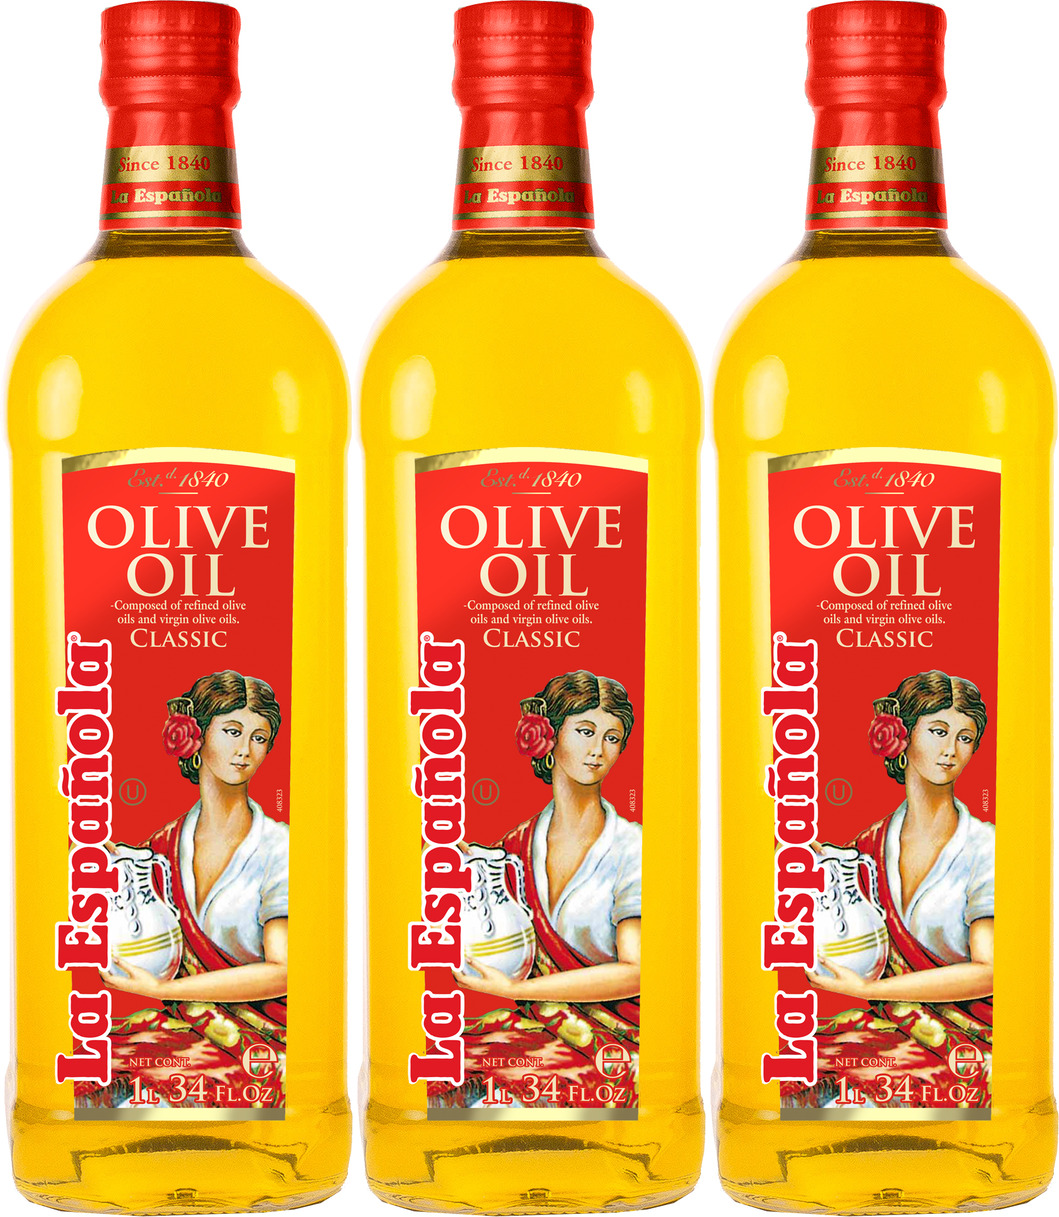 Оливковое масло la espanola